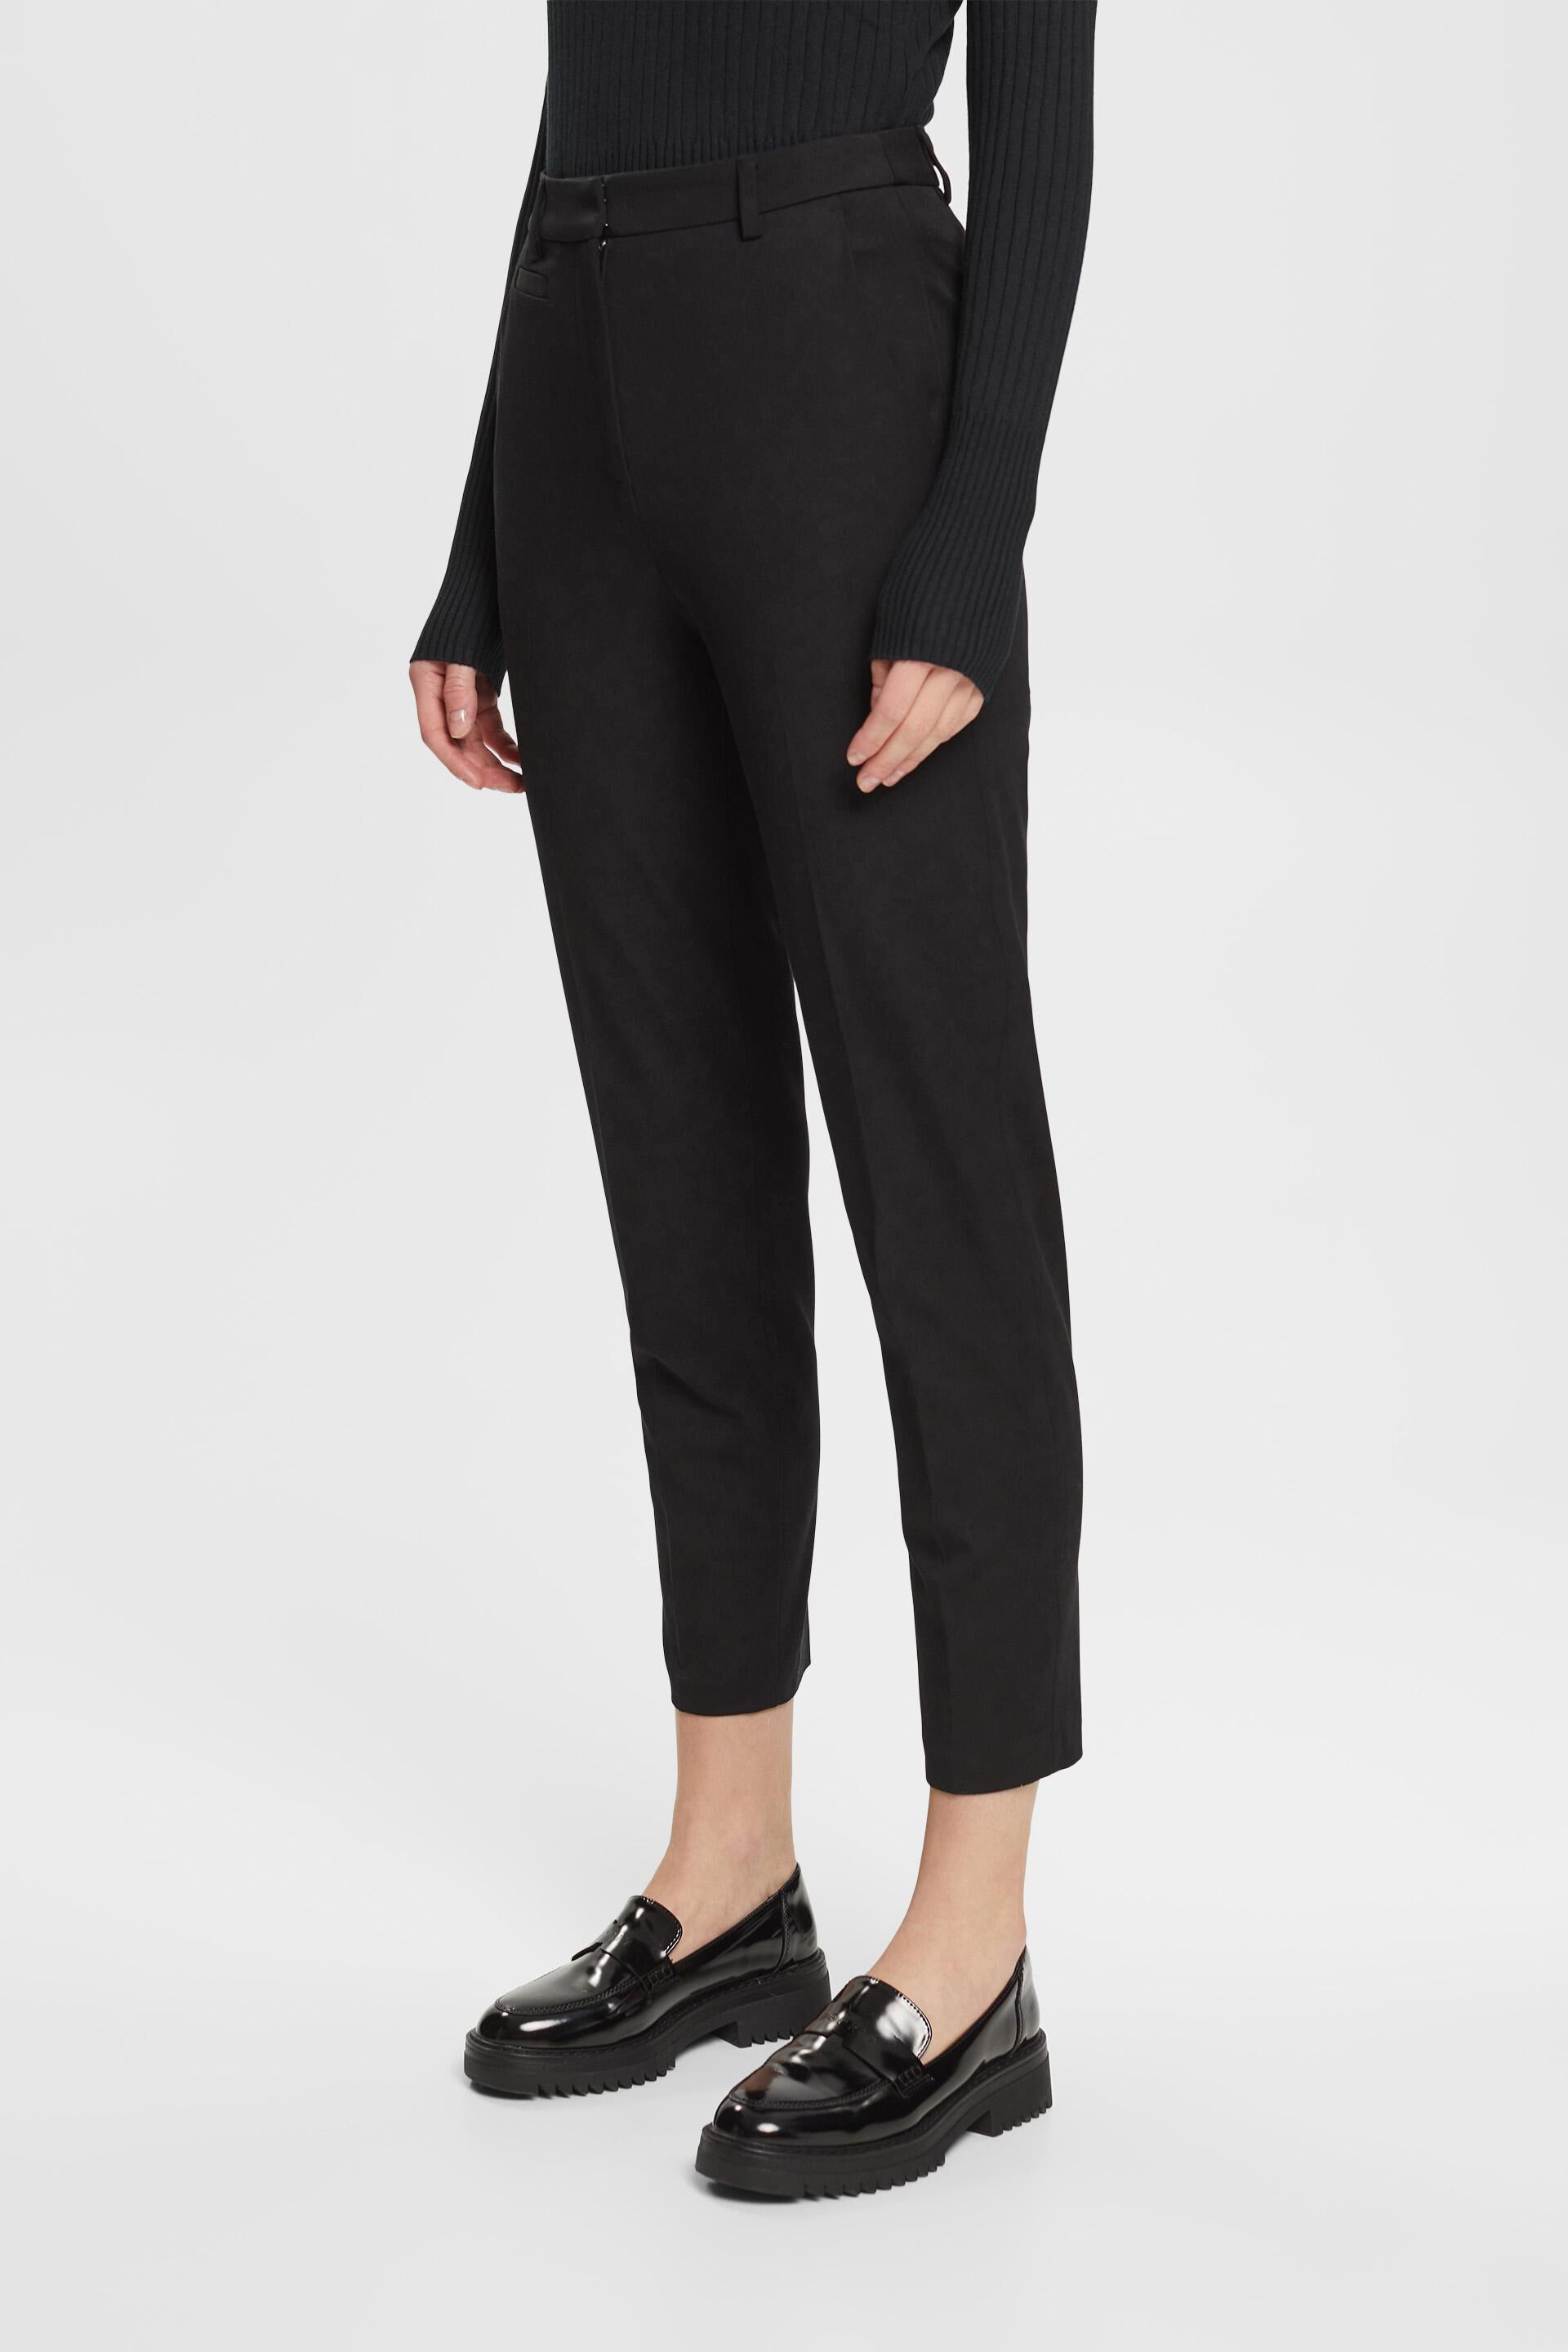 Esprit Pantalon zwart-lichtgrijs geruite print zakelijke stijl Mode Pakken Pantalons 